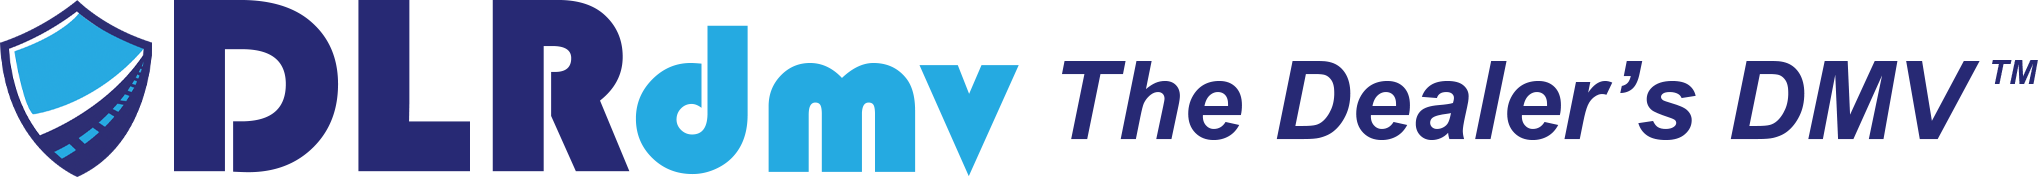 DLRdmv logo